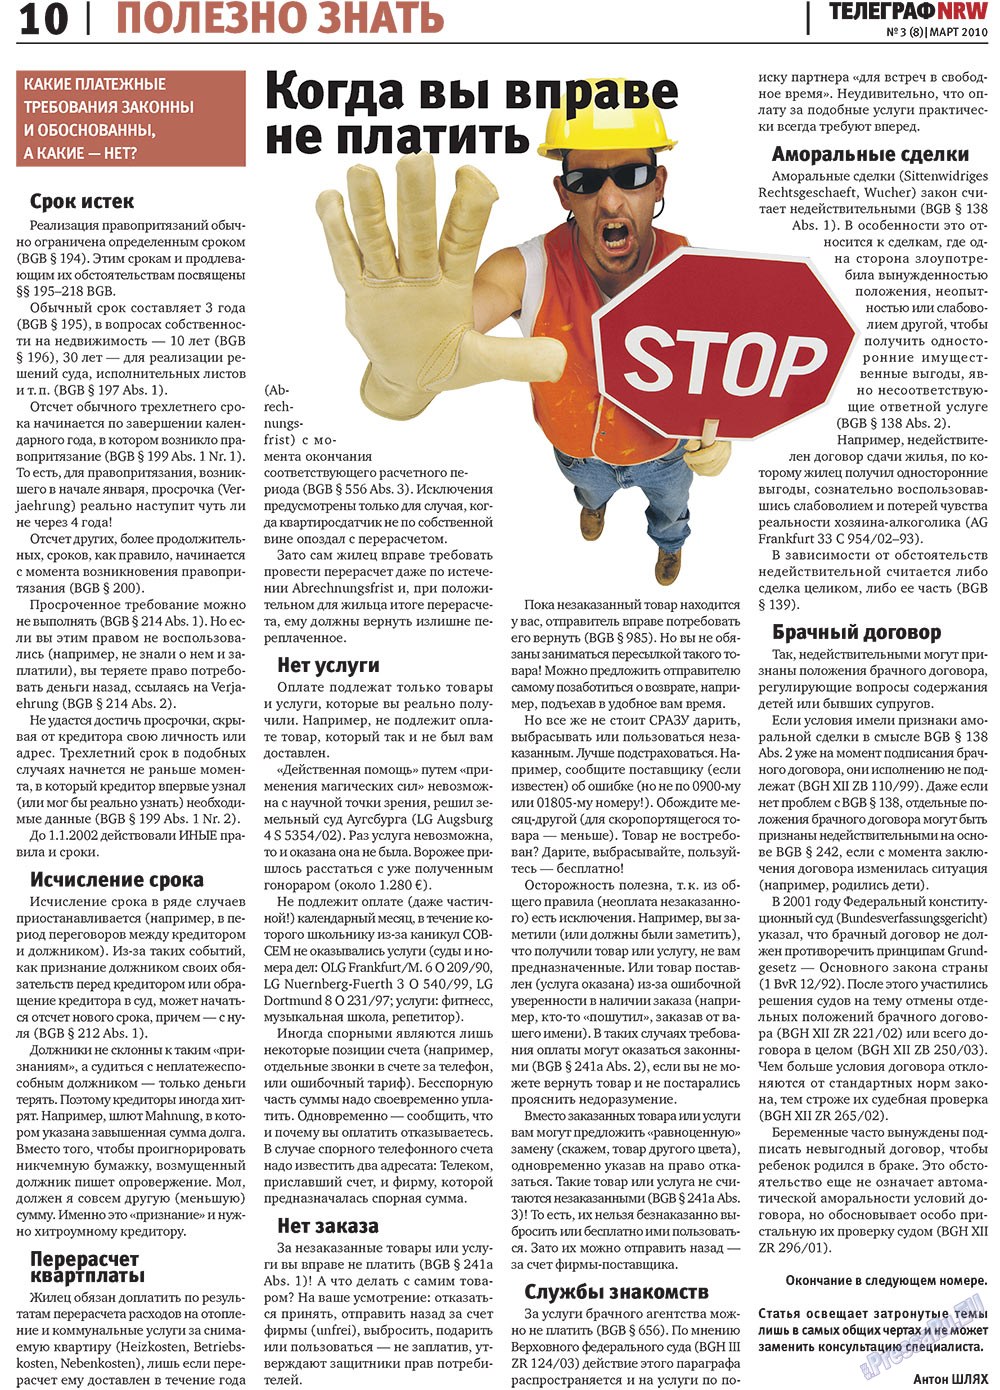 Телеграф NRW, газета. 2010 №3 стр.10